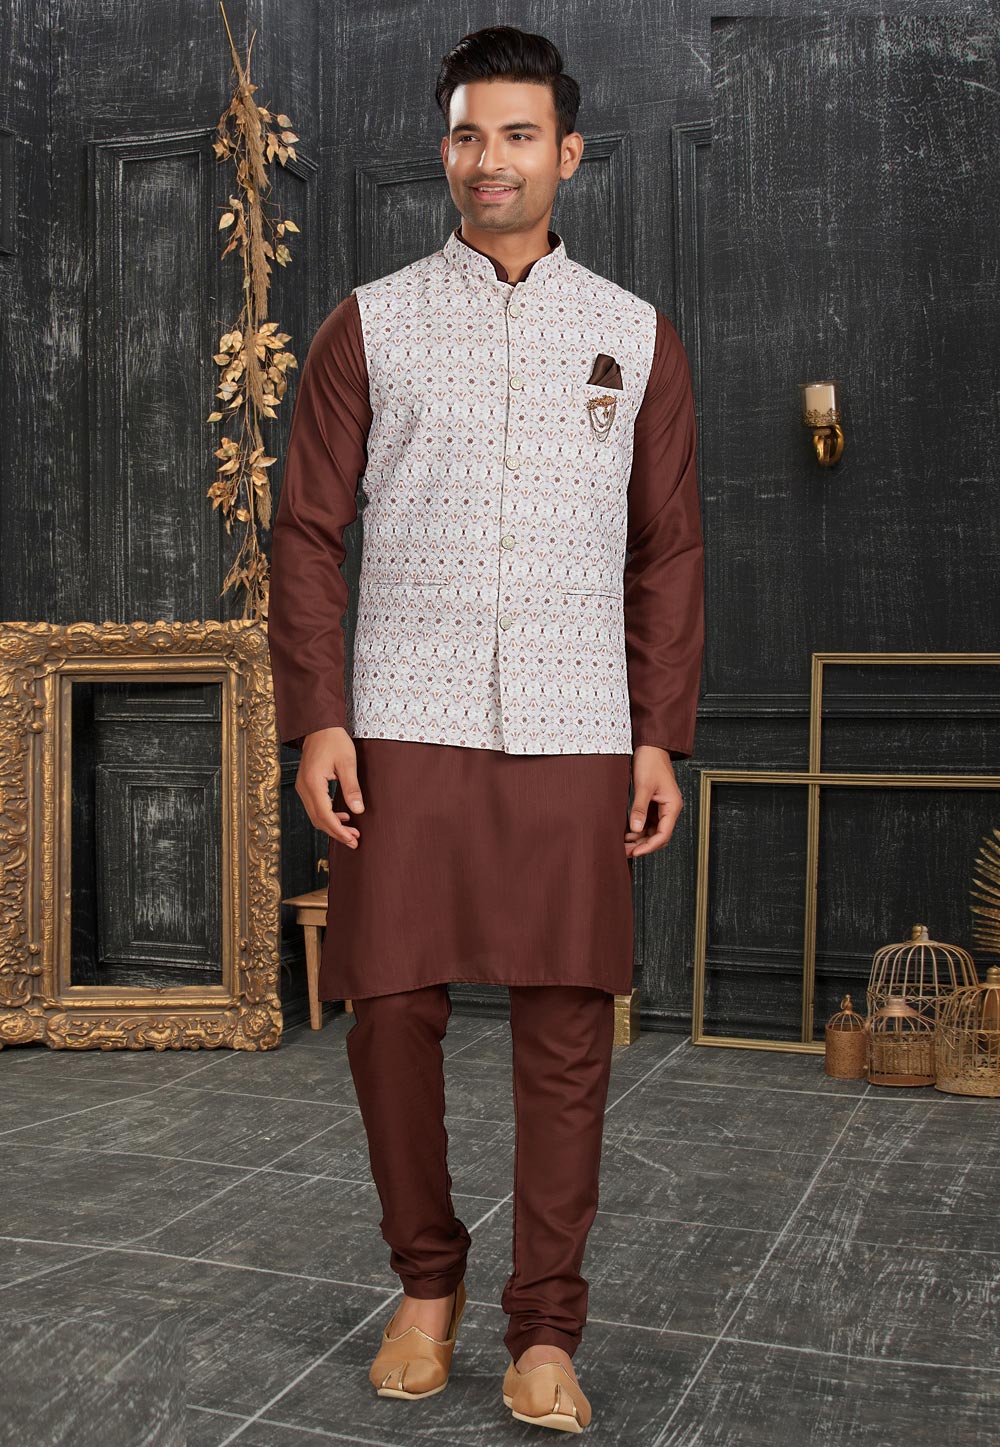 Men's Maroon Ethnic Motifs Kurta with Pyjamas & Nehru Jacket